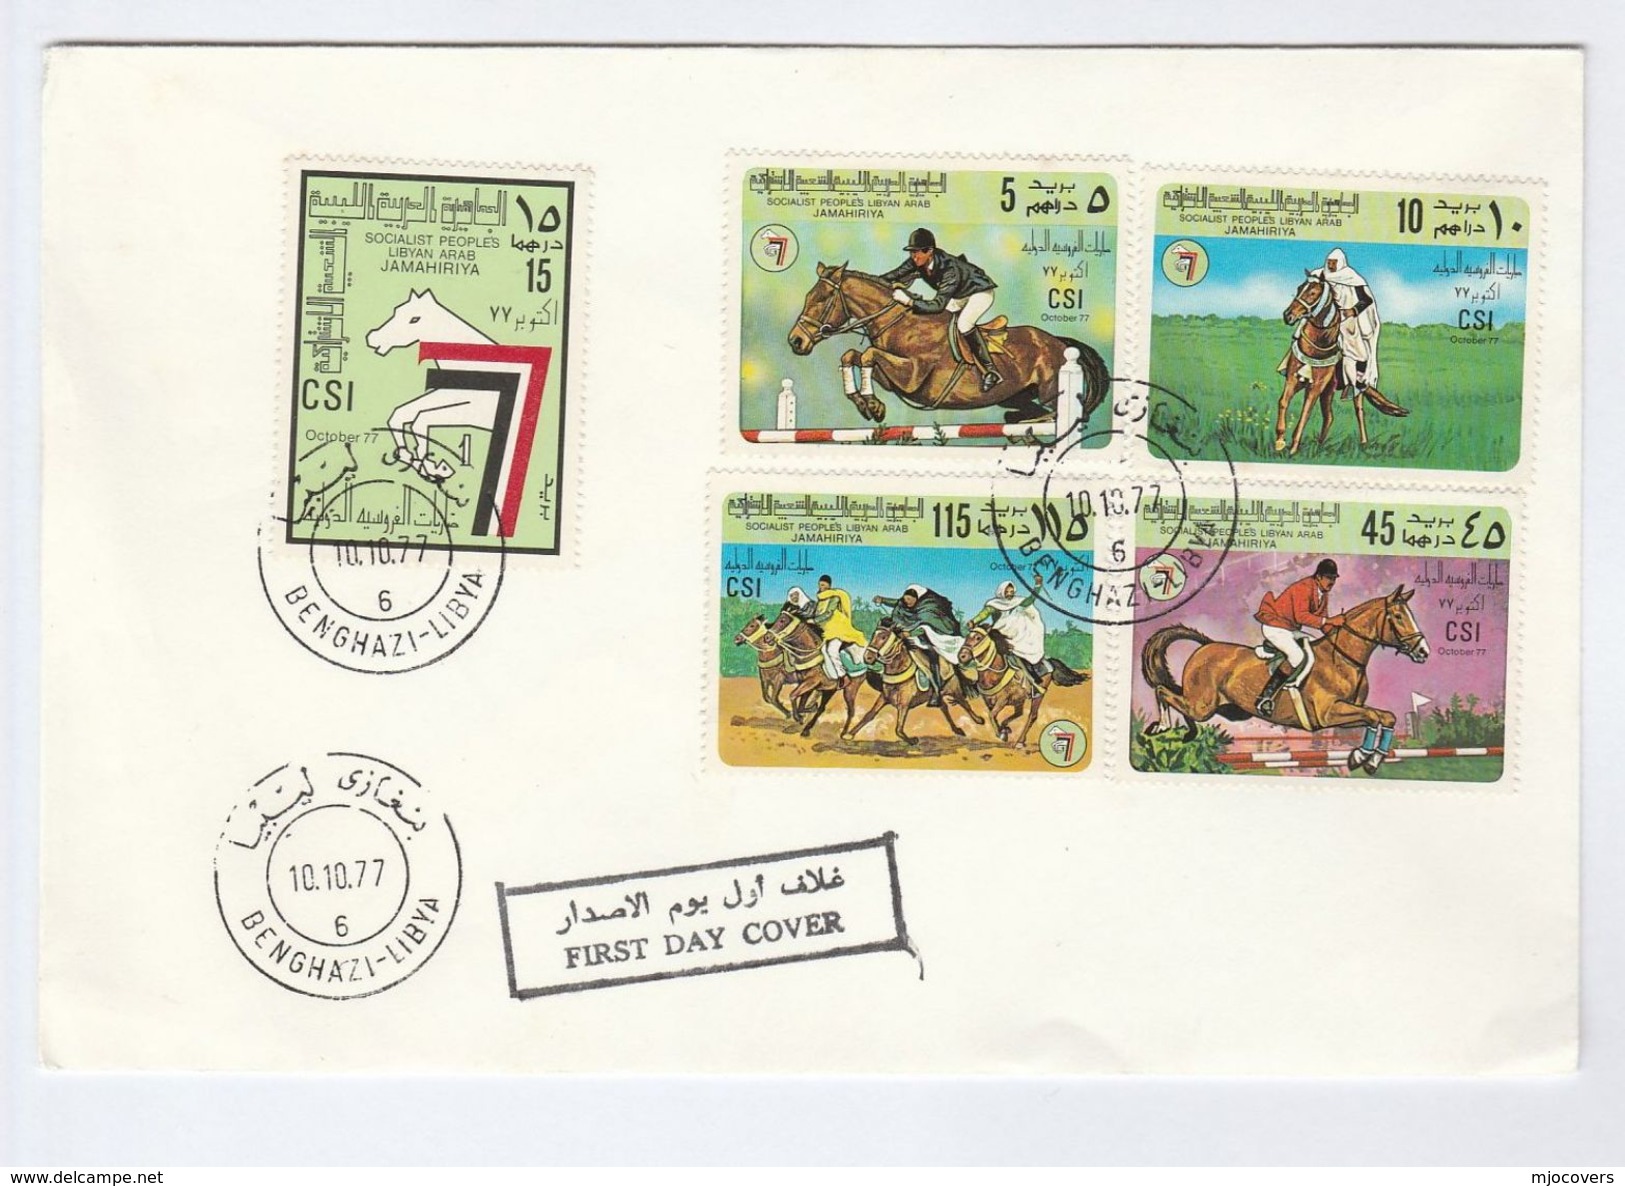 1977 Benghazi  LIBYA FDC Stamps HORSE SPORT EQUESTRIAN International Horse Show Horses Cover - Libia